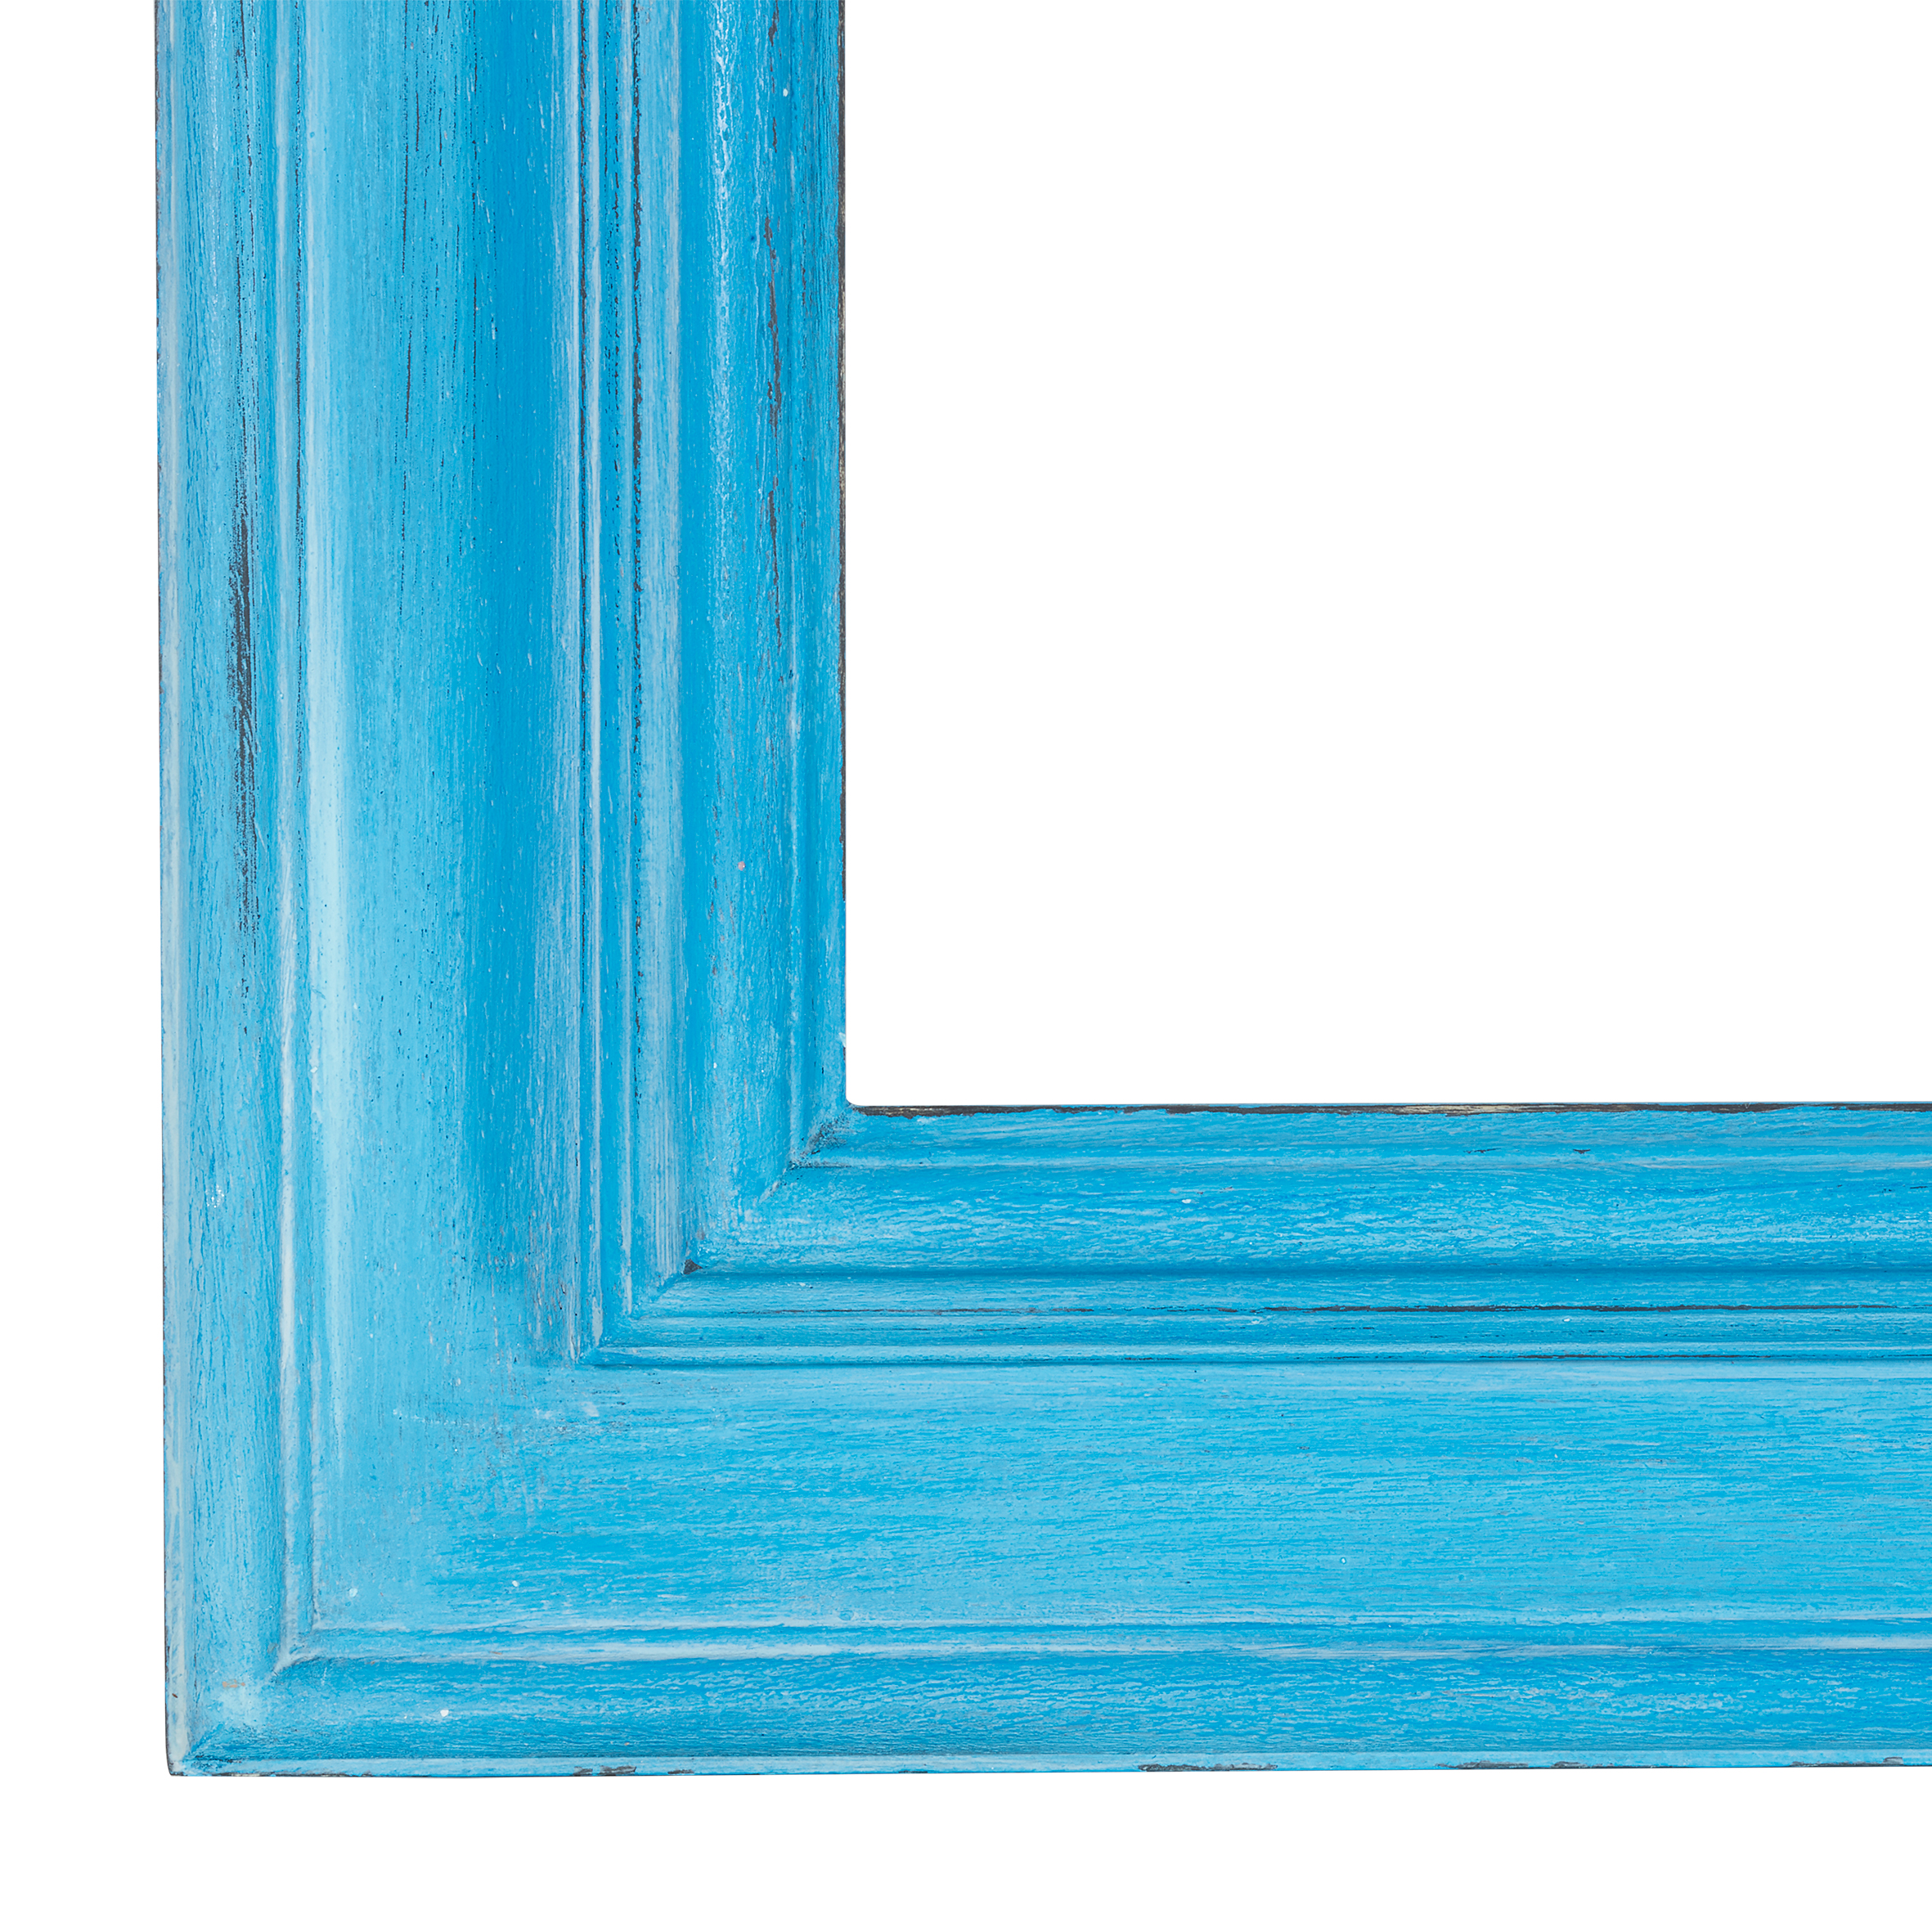 Fotorahmen Modell Florence im Shabby-Chic Stil, Finishing: Wachstechnik, Design/Farbe: Warm & Dusty blue, Made in Germany, Material: Holz, Spiegel: Facettenspiegel, Style: modern, Ansicht Ecke